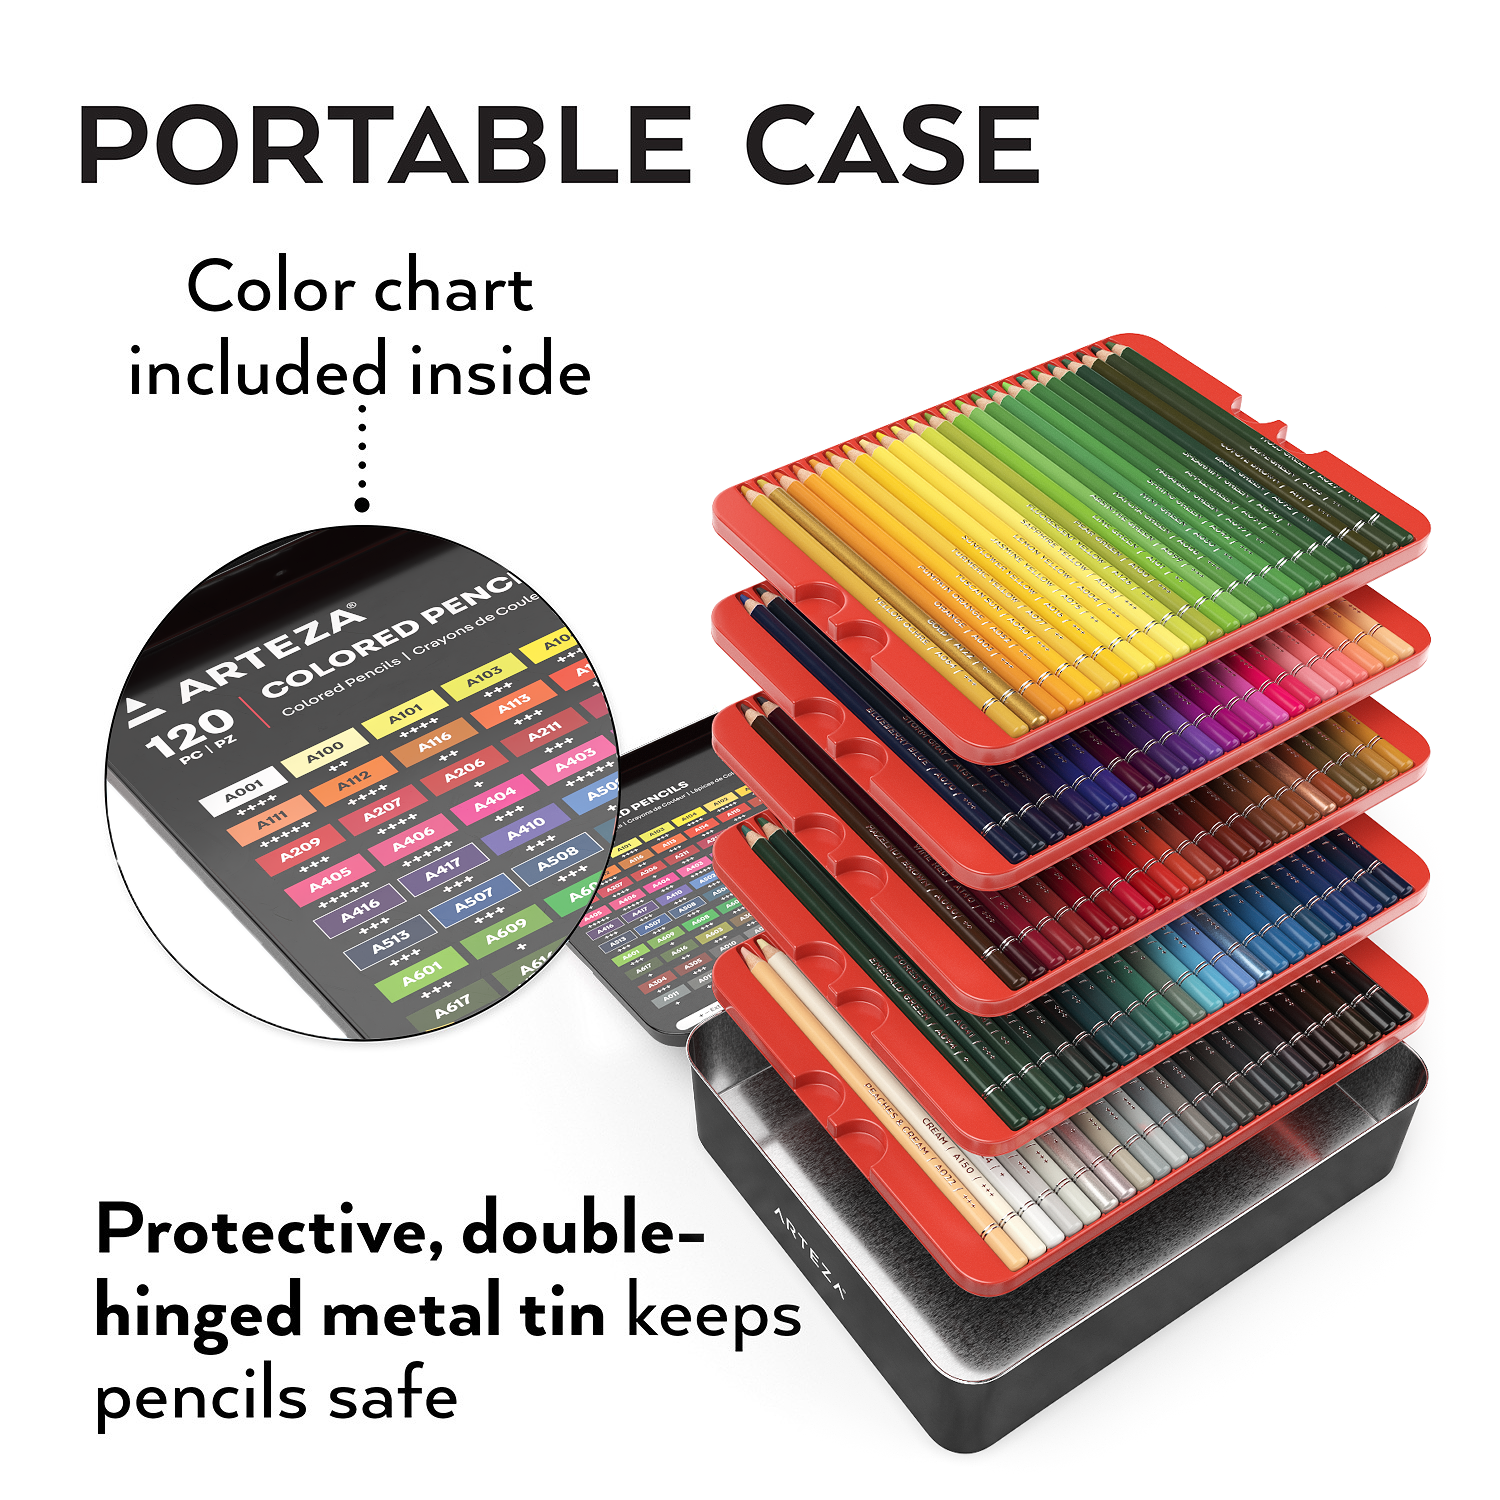 PRINA Art Supplies 120-Color Colored Pencils Set for Adults